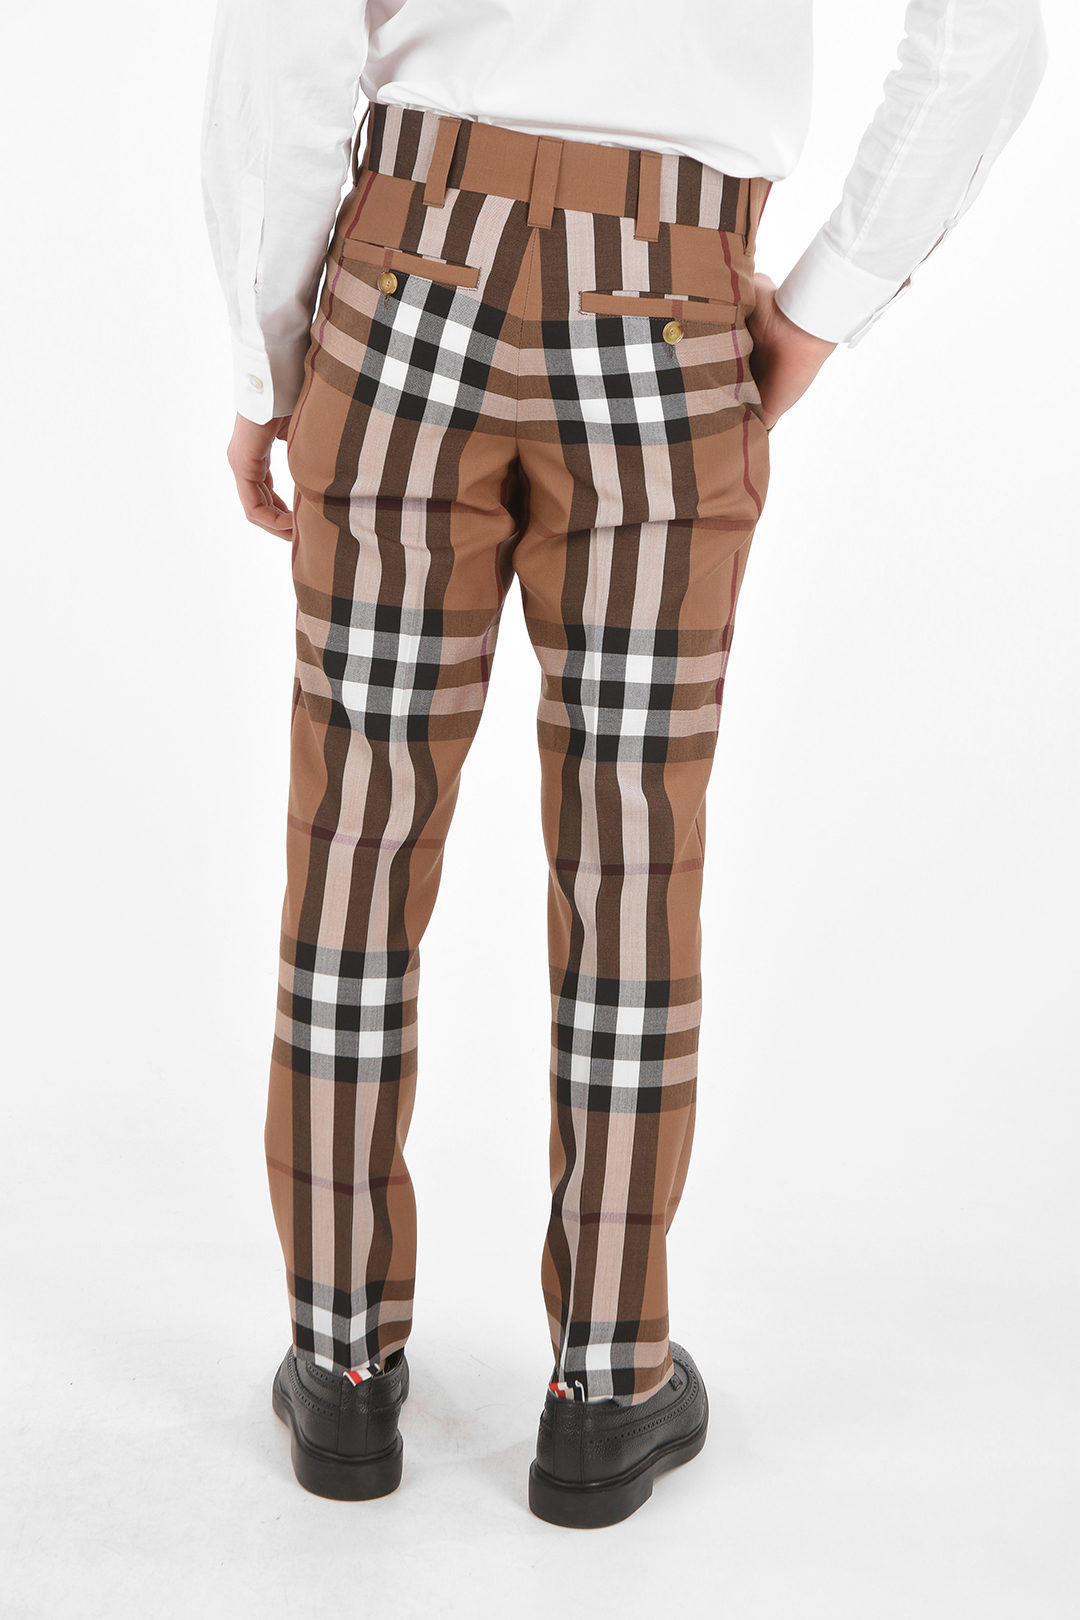 Burberry 4 Pocket Tartan Pants with Belt Loops men  Glamood Outlet